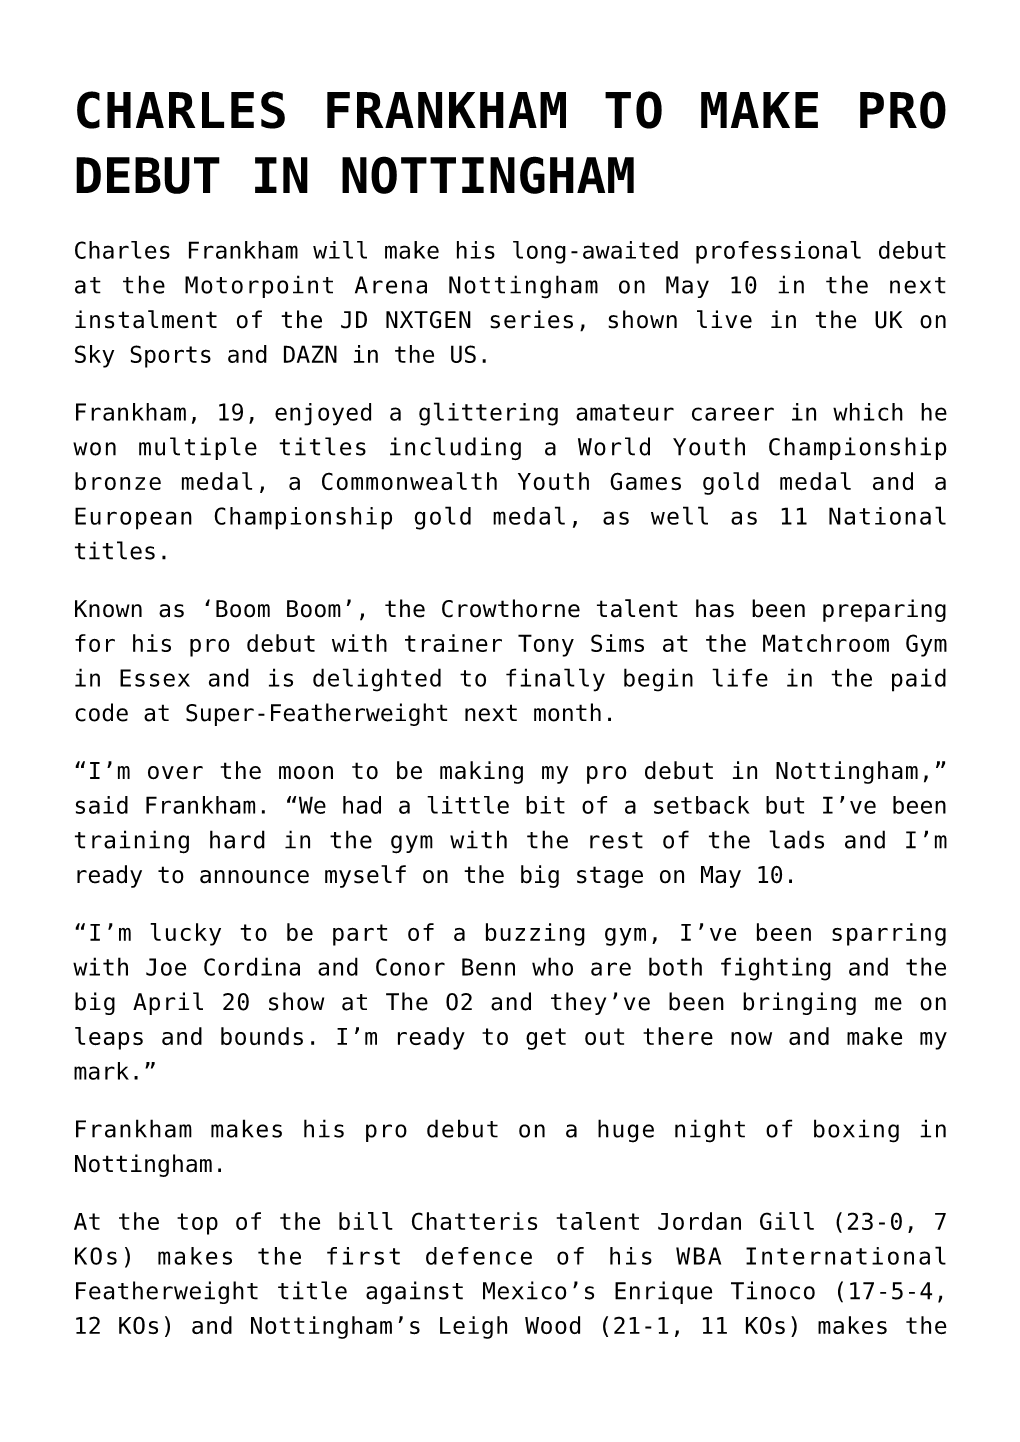 Charles Frankham to Make Pro Debut in Nottingham